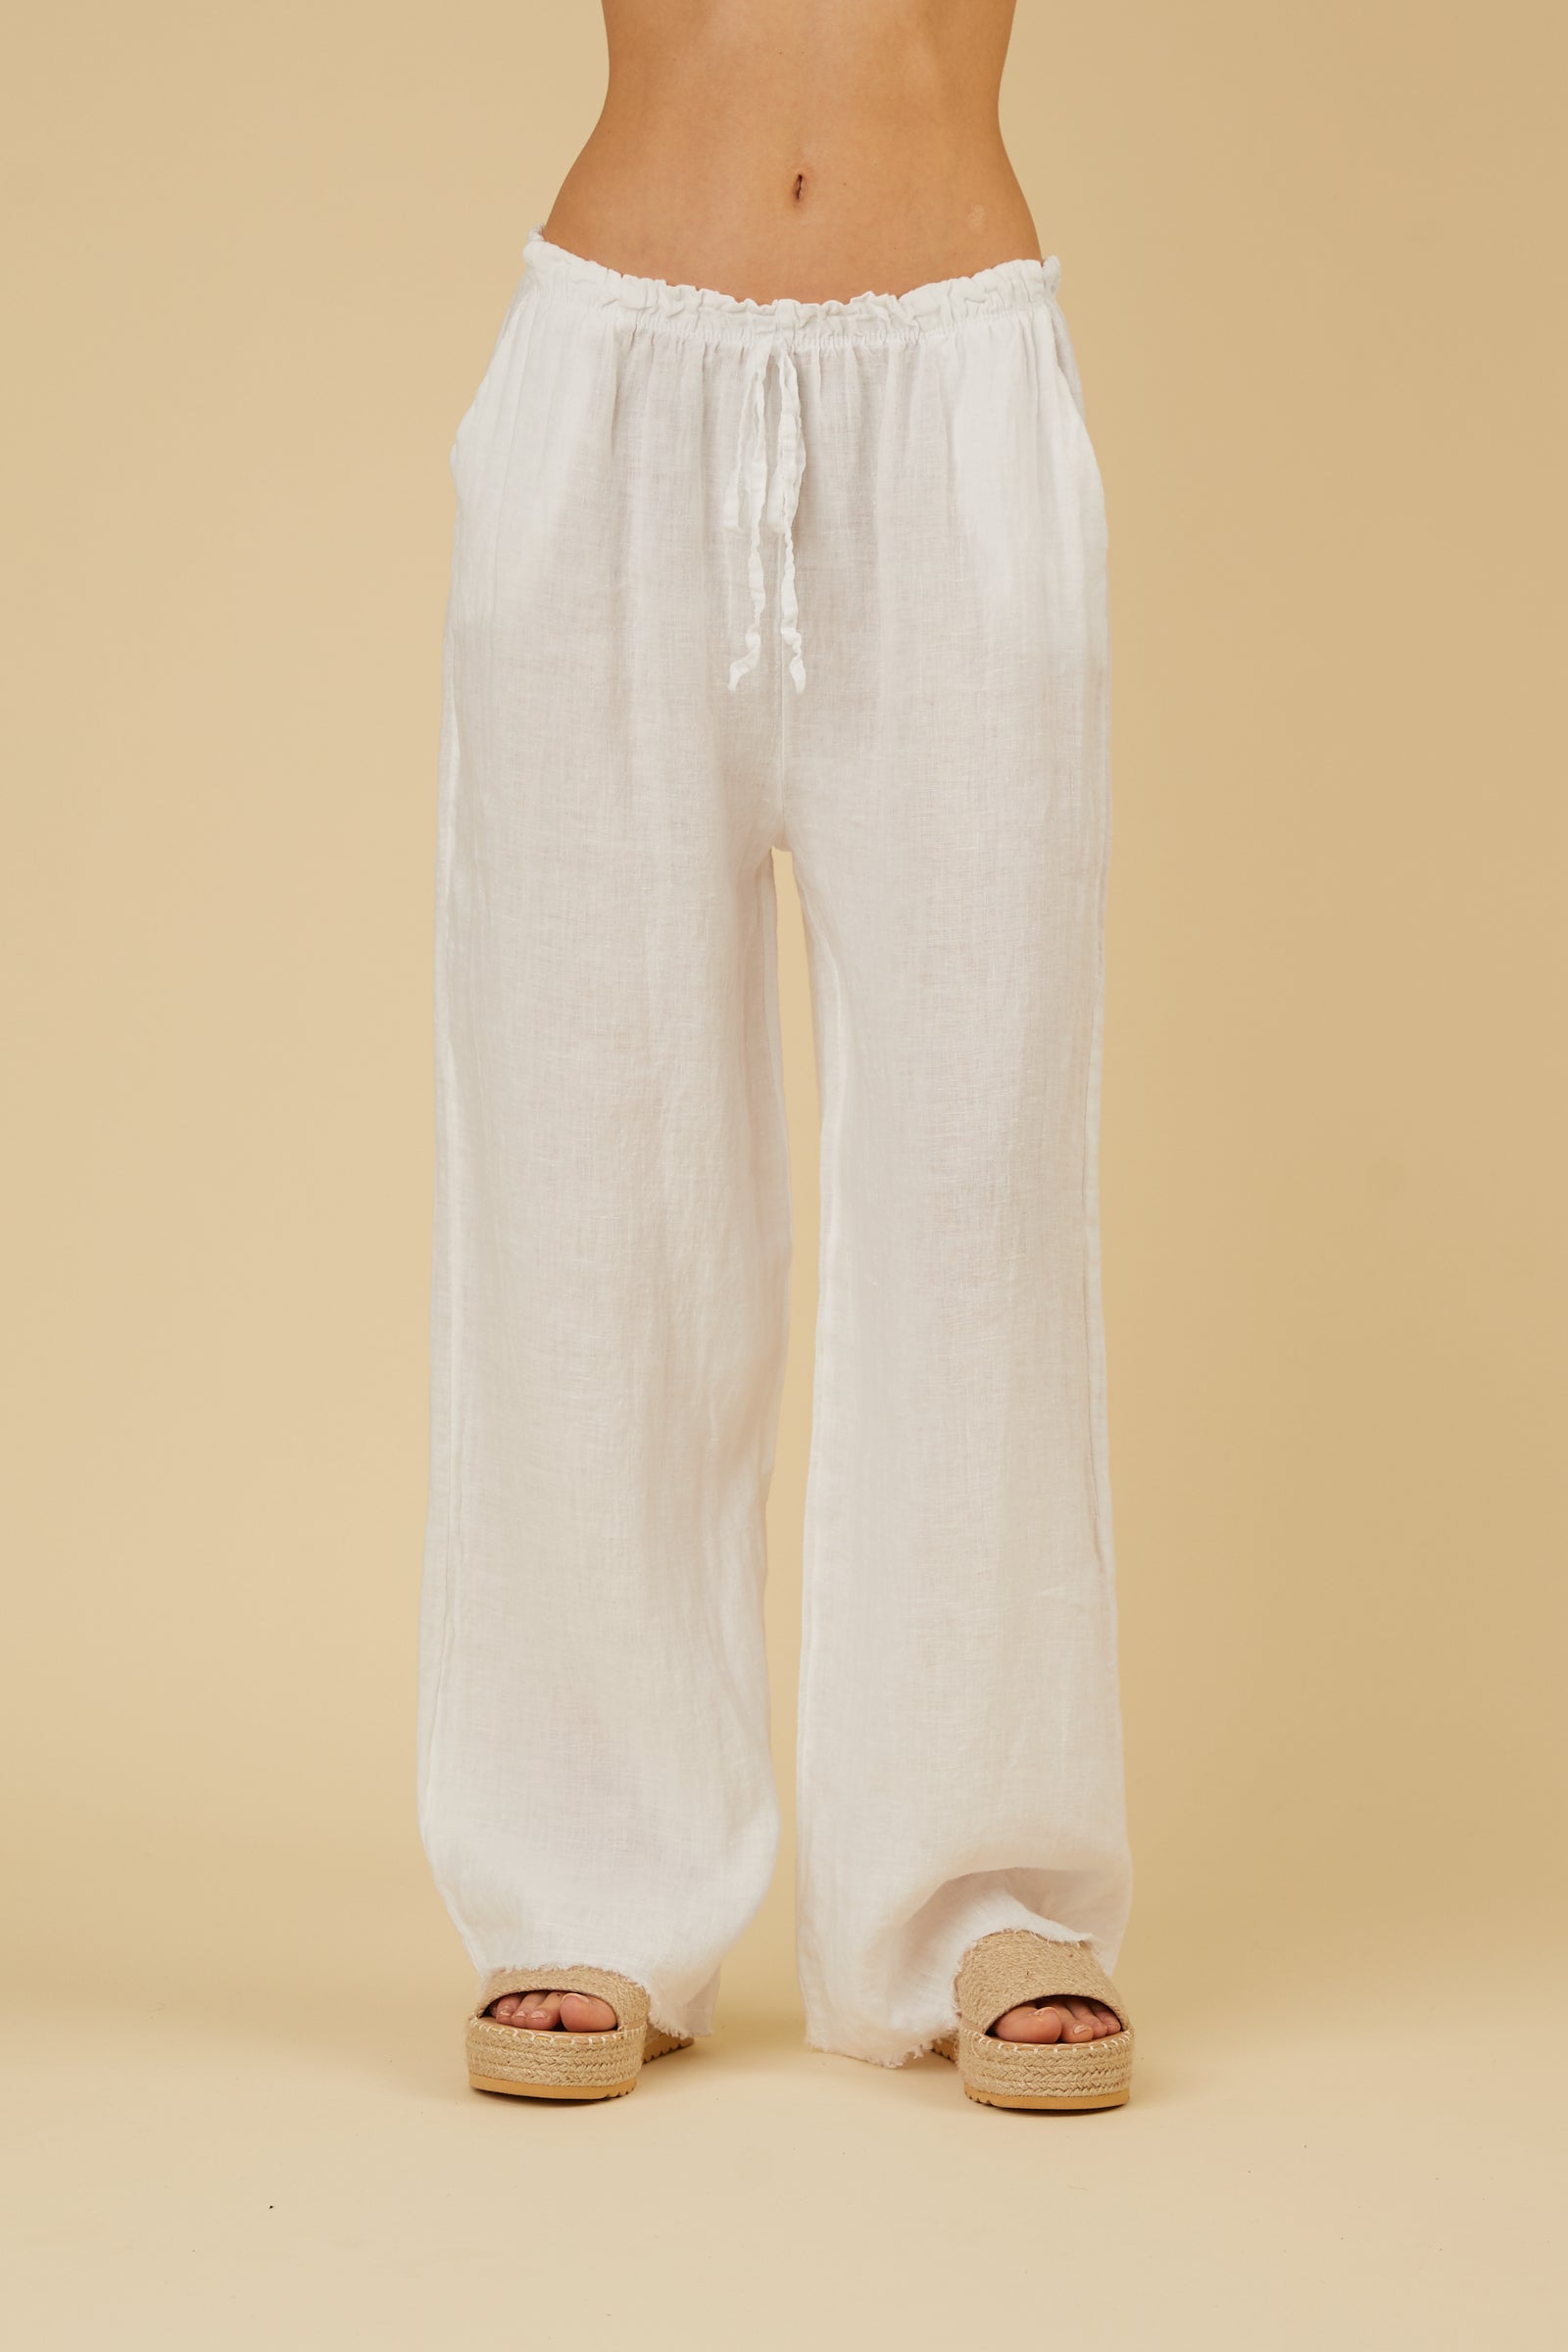 Bar III Petite Faux-Leather Wide-Leg Pants, Created for Macy's - Macy's